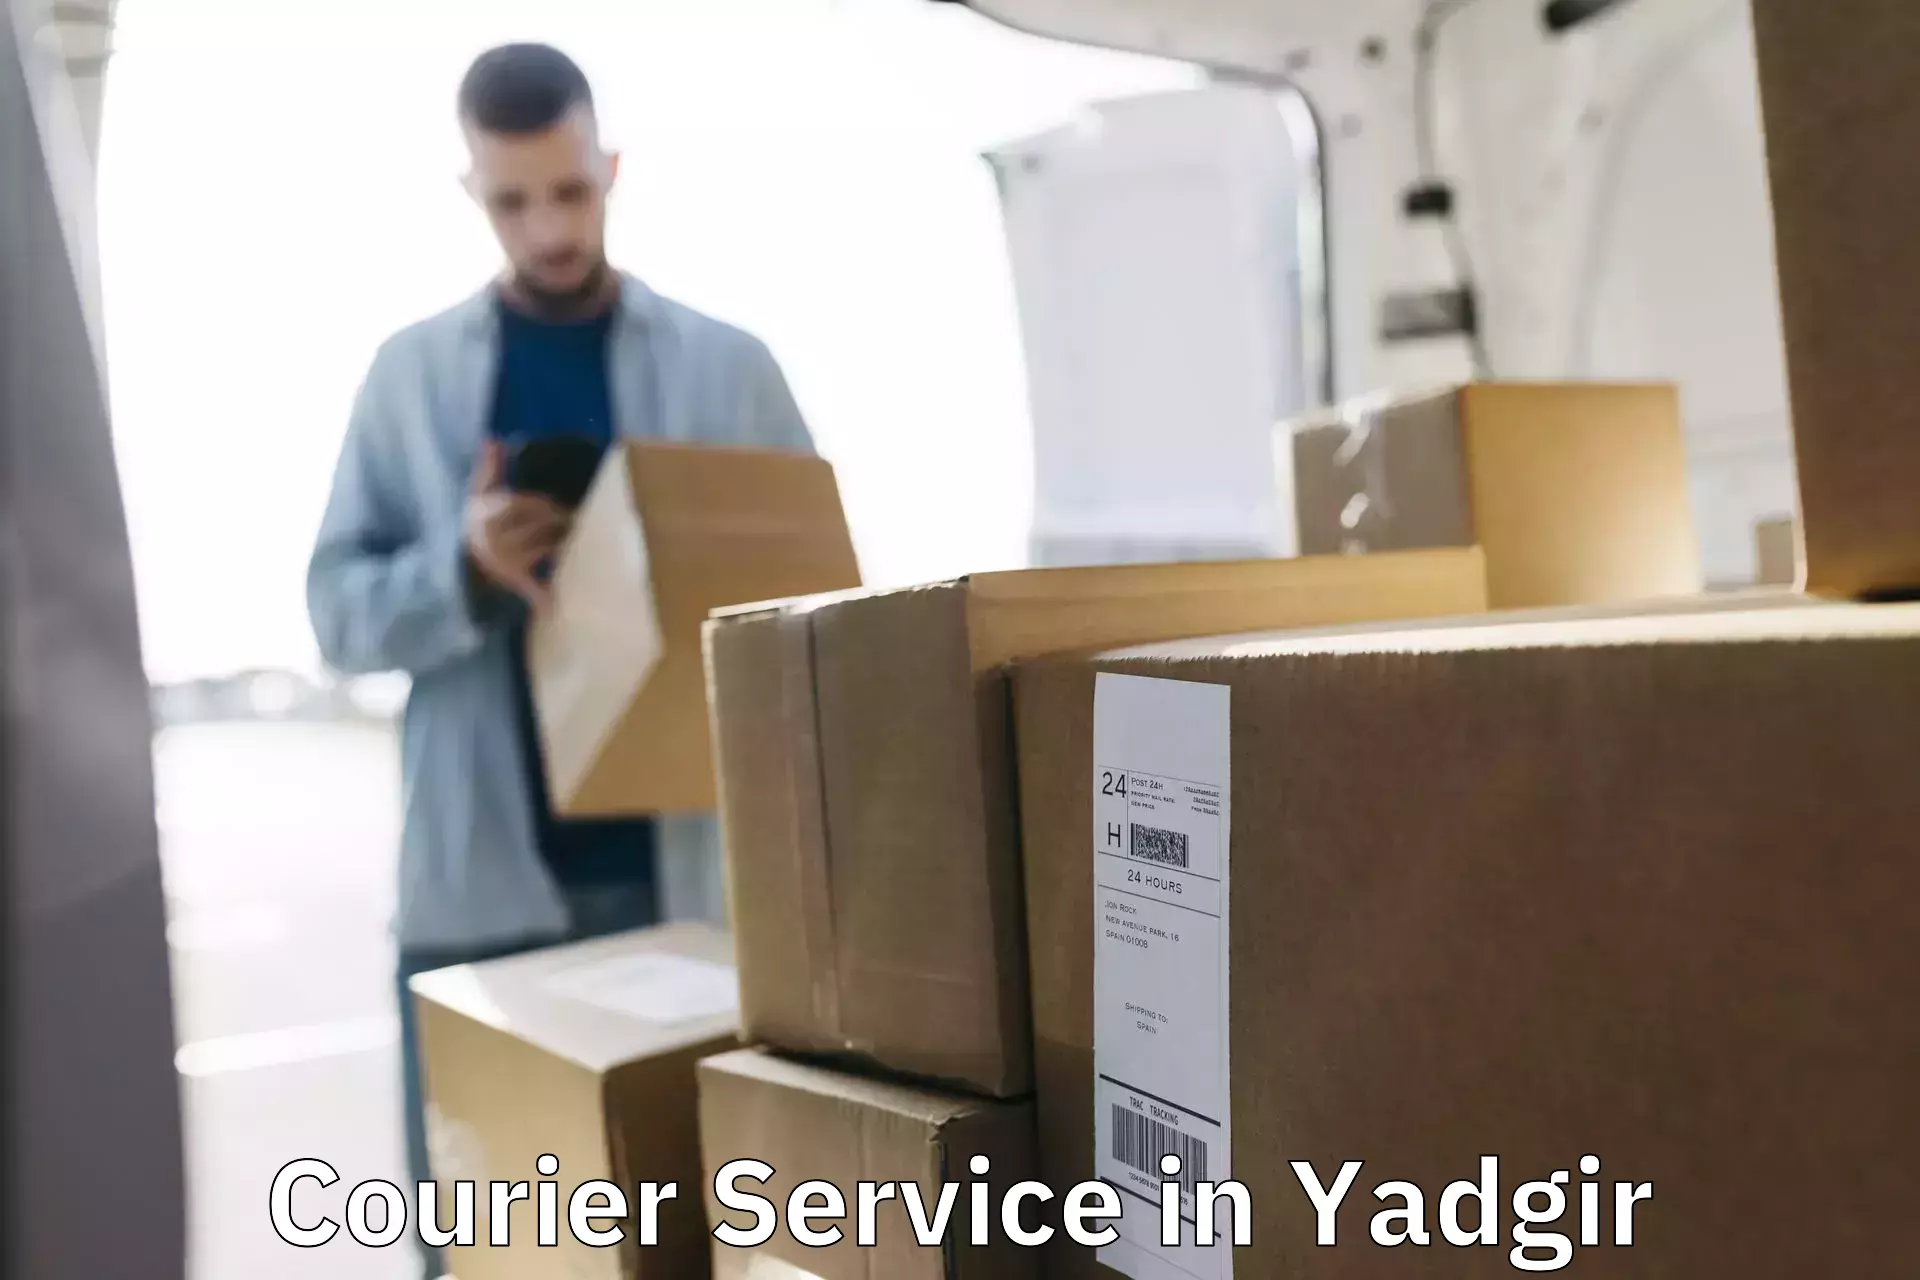 Efficient logistics management in Yadgir